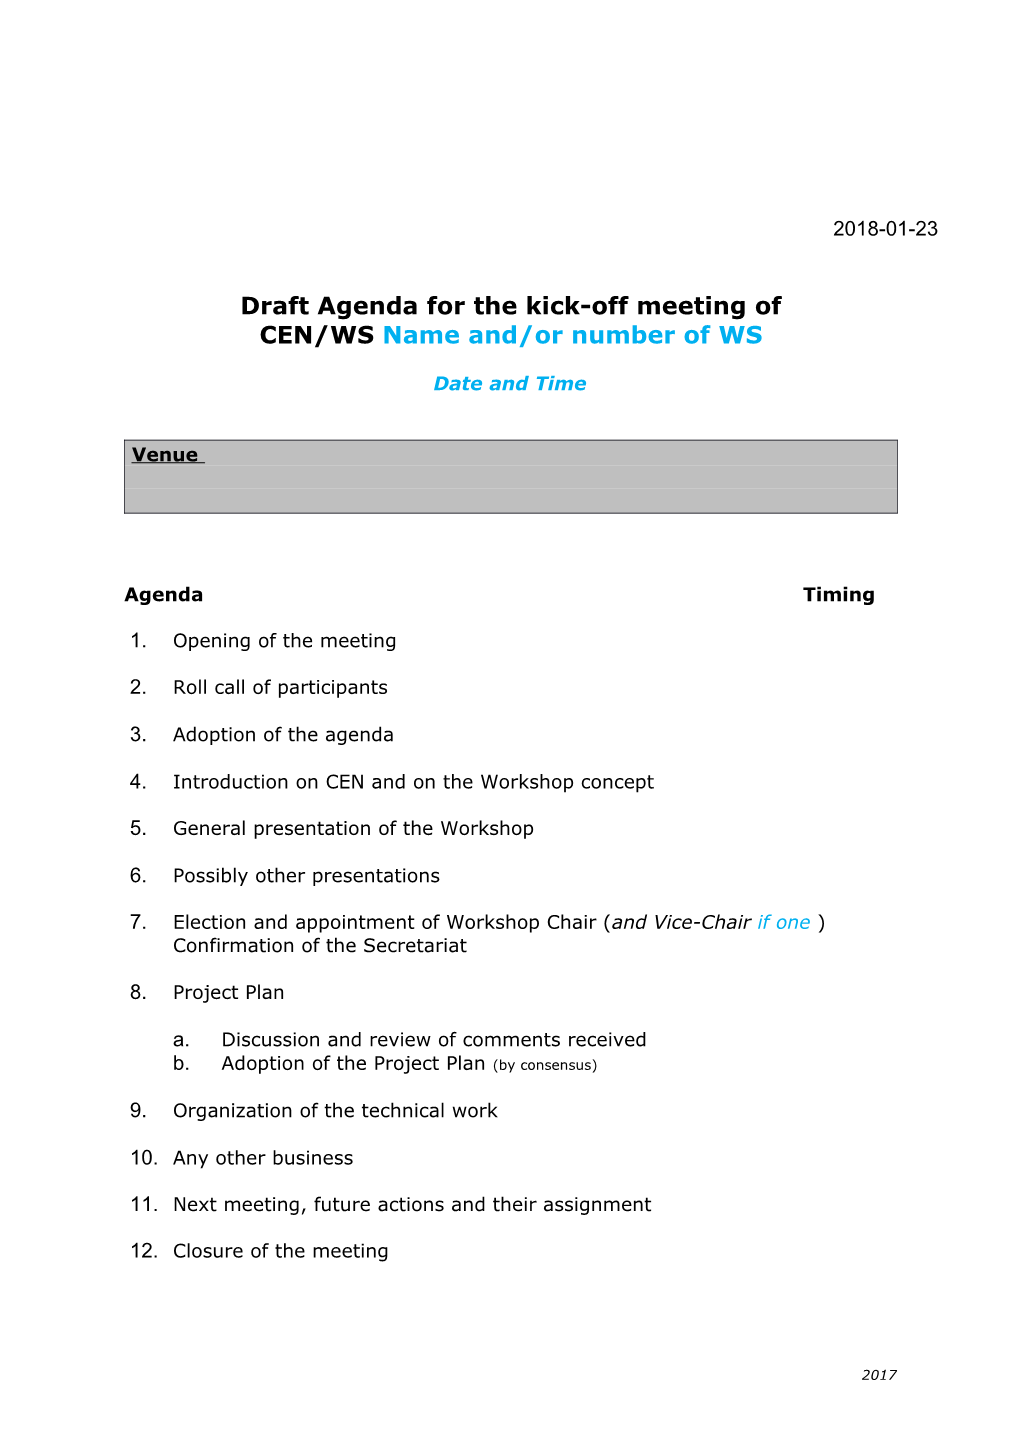 Workshop Kick-Off Meeting - Agenda Template